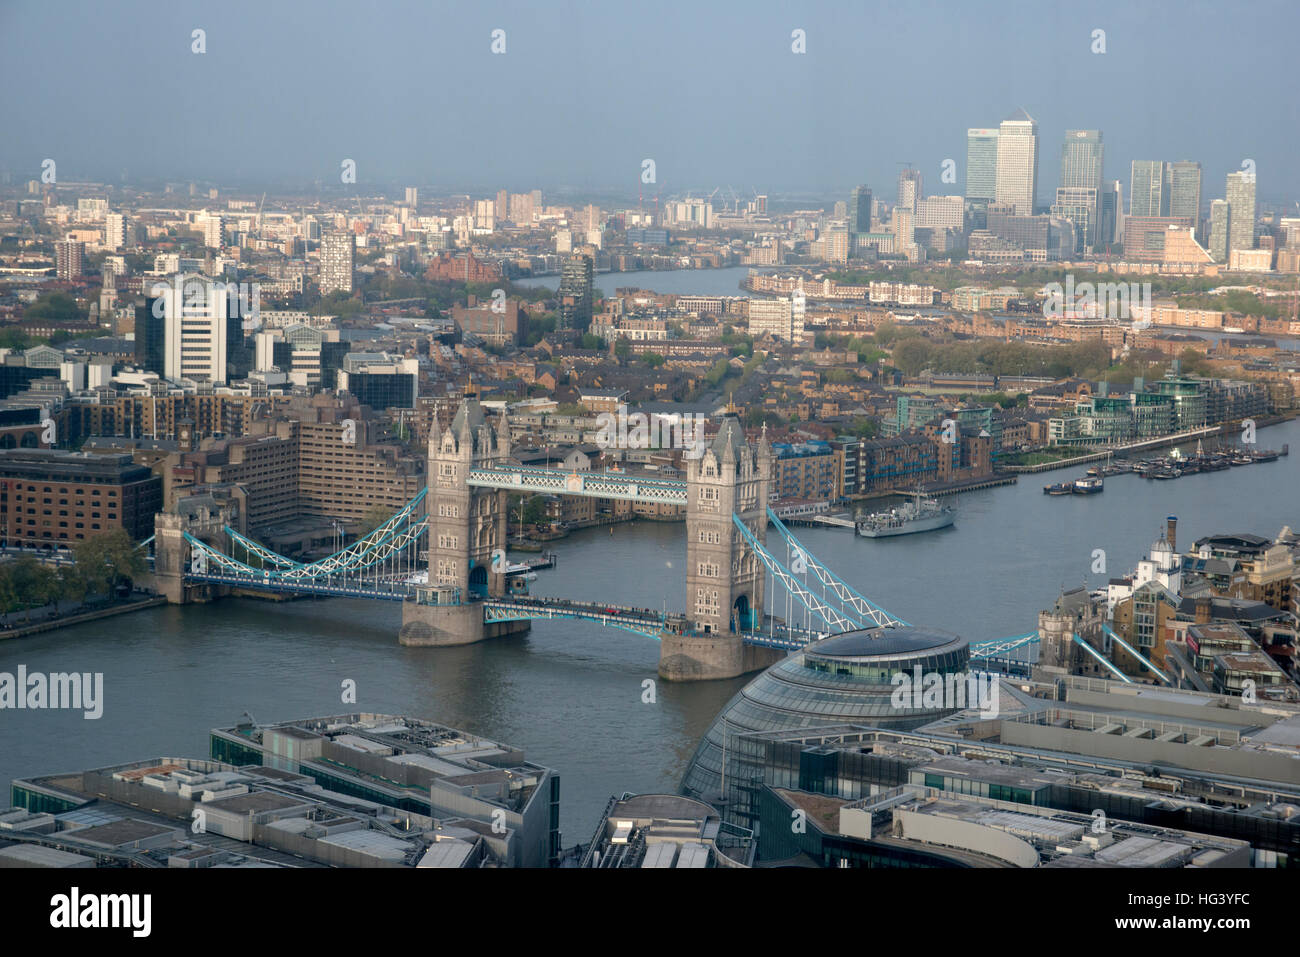 Blick vom (auf halber Höhe) der Shard, London, SE1, UK. Stockfoto